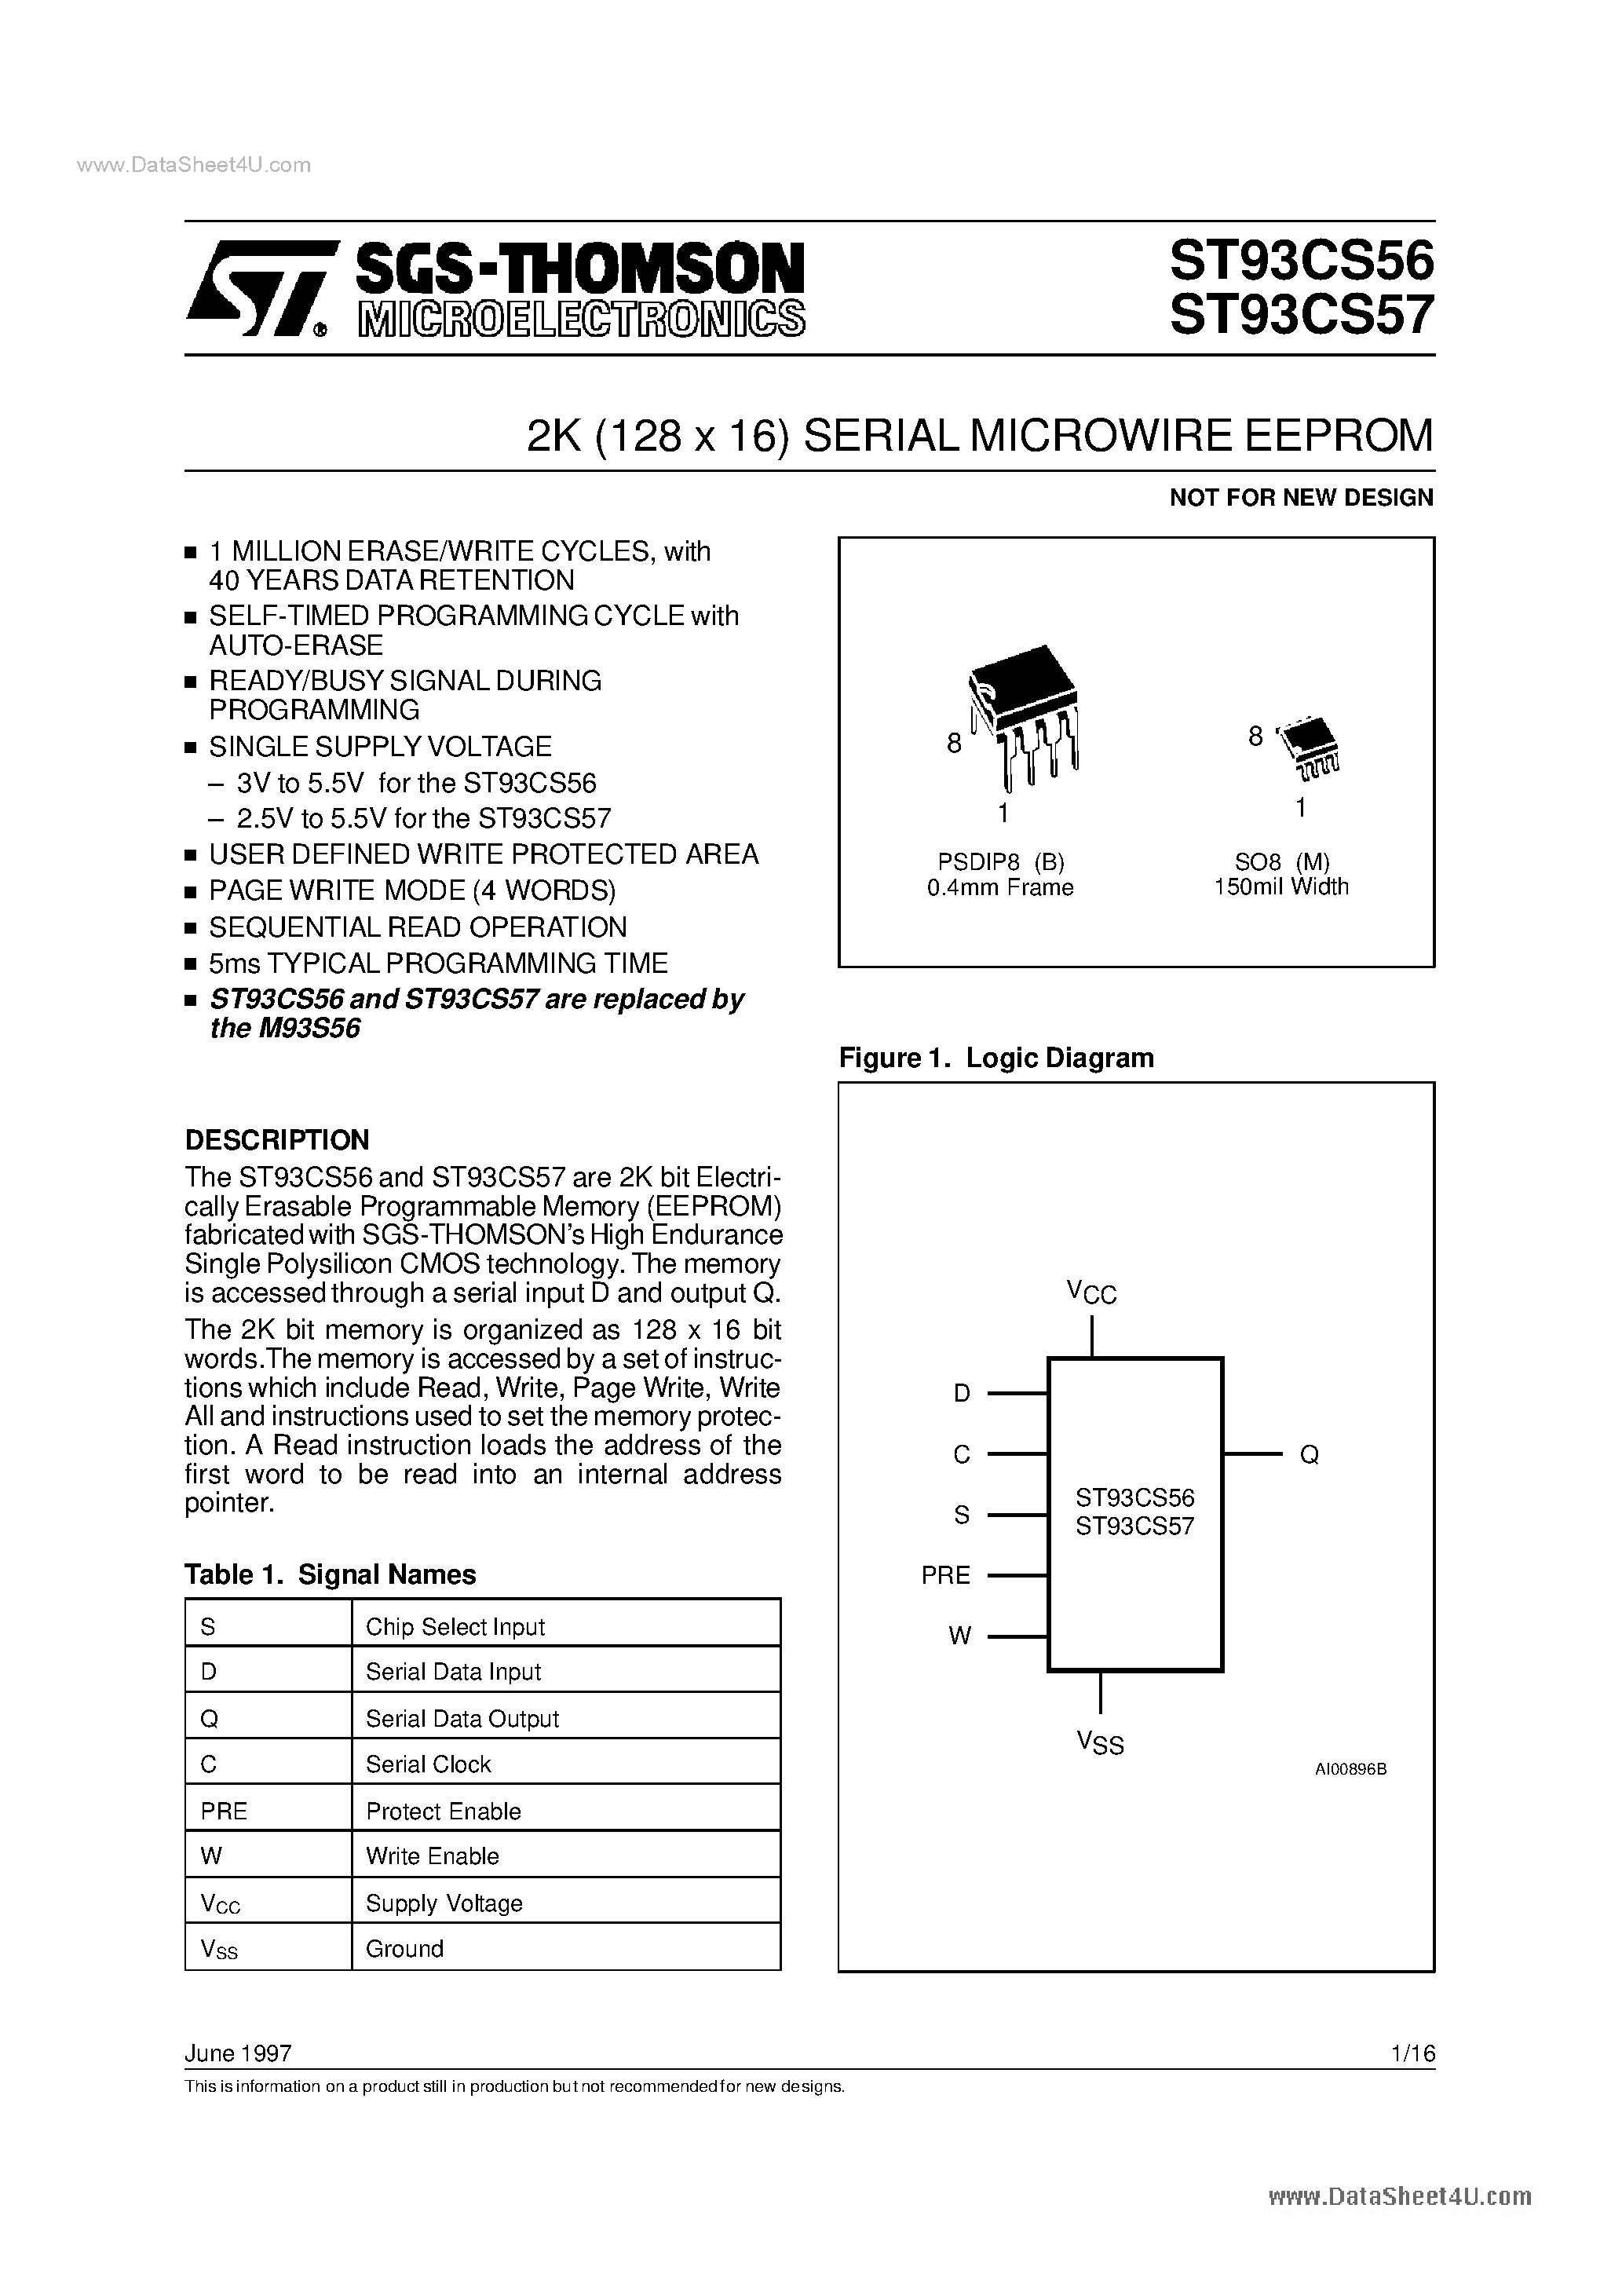 Datasheet ST93CS56 - (ST93CS56 / ST93CS57) 2K 128 x 16 SERIAL MICROWIRE EEPROM page 1